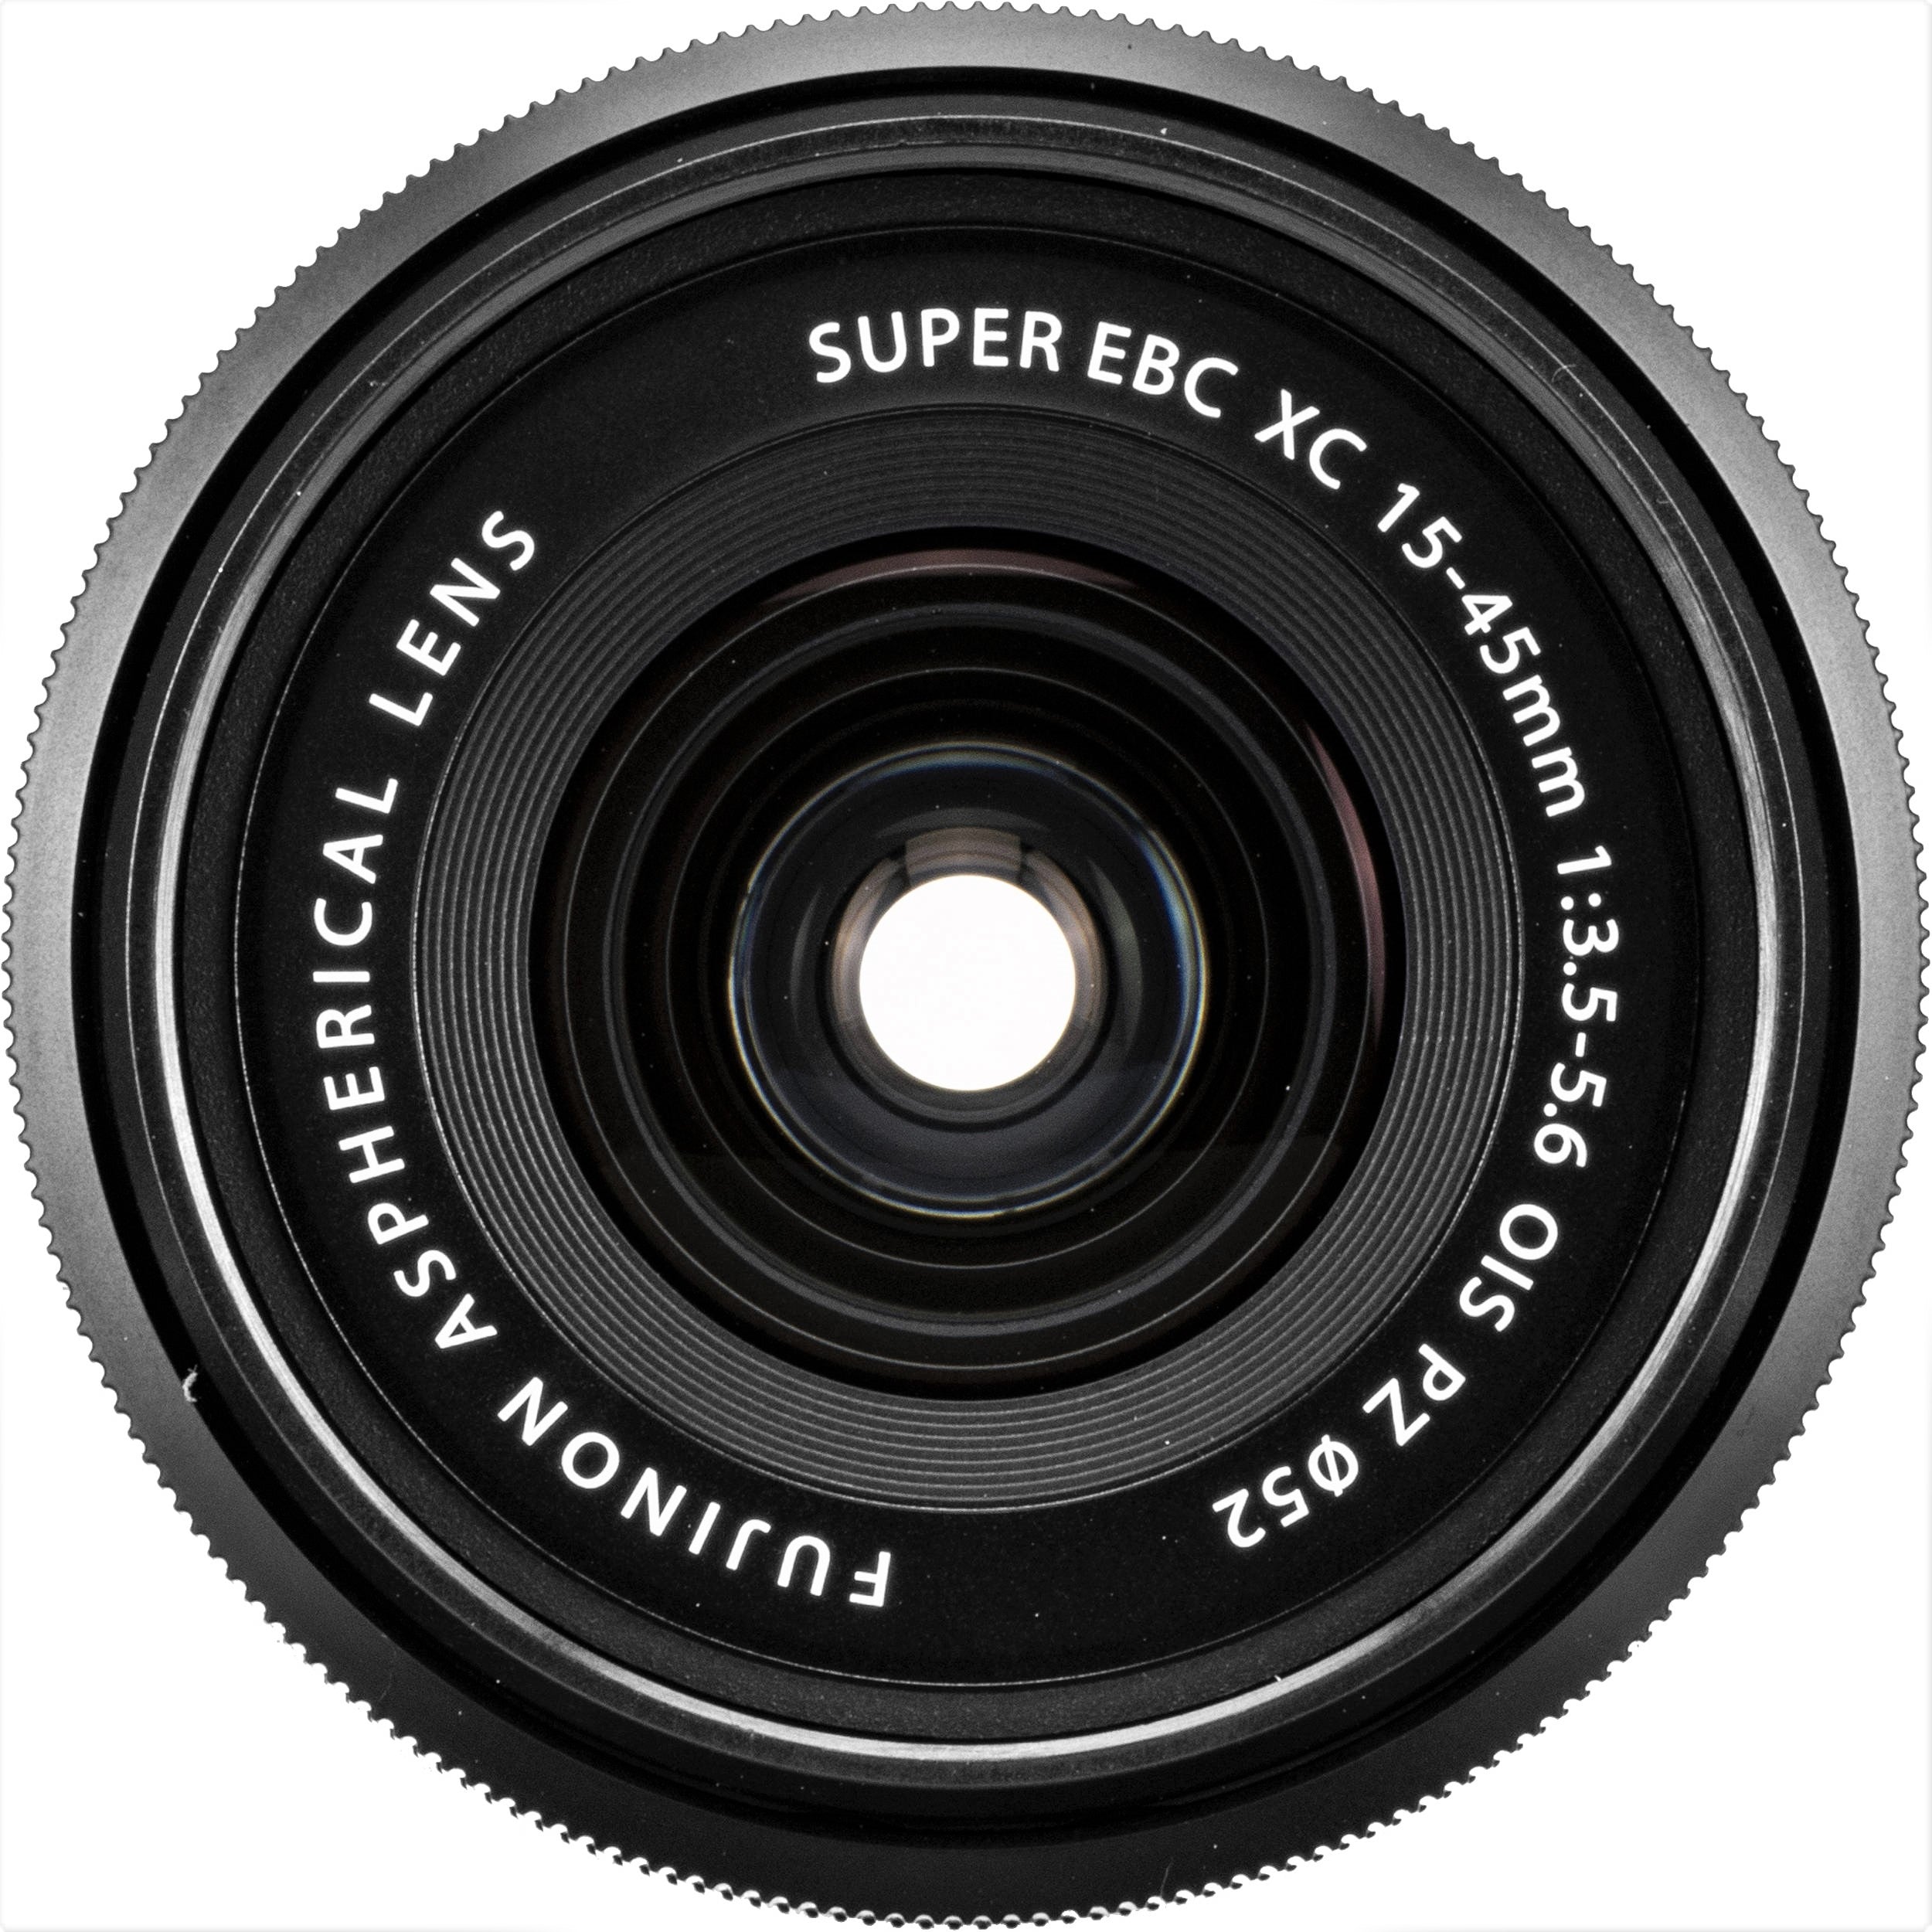 Fujinon XC15-45mmF3.5-5.6 OIS PZ Lens - Front View